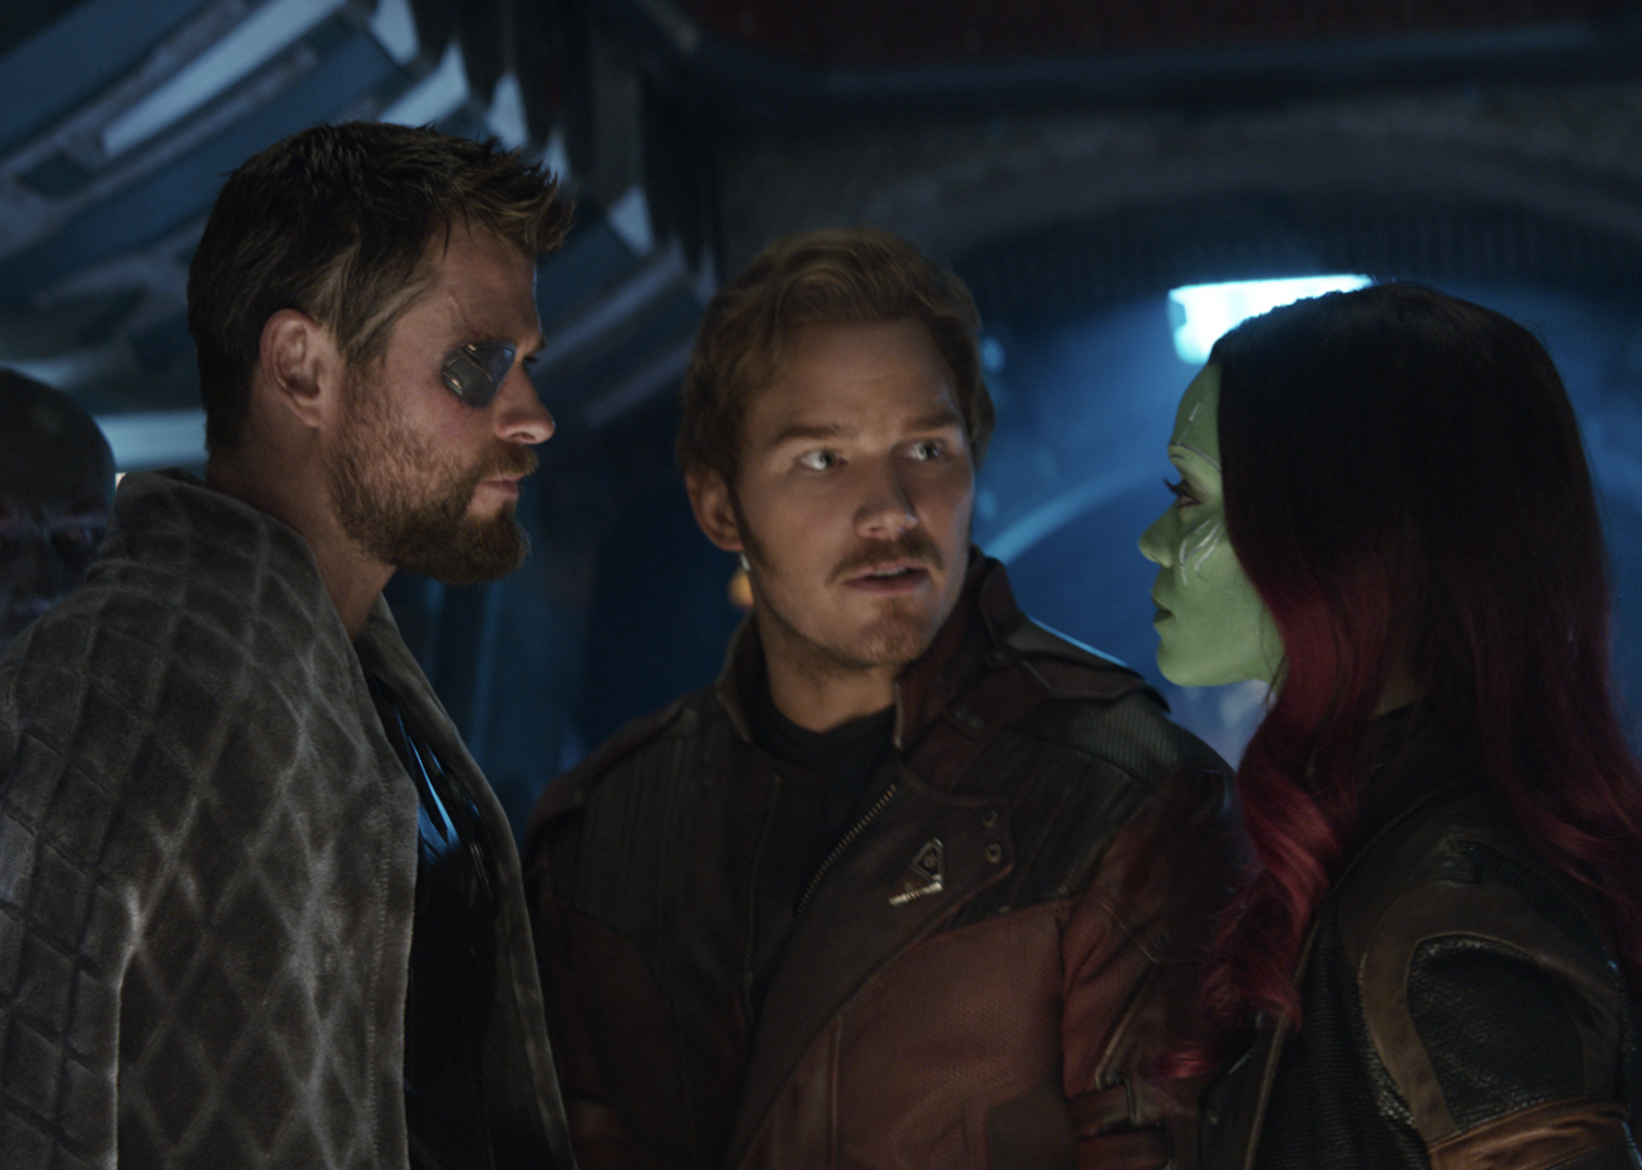 Chris Pratt, Zoe Saldana, Chris Hemsworth, and Dave Bautista in "Avengers: Infinity War"